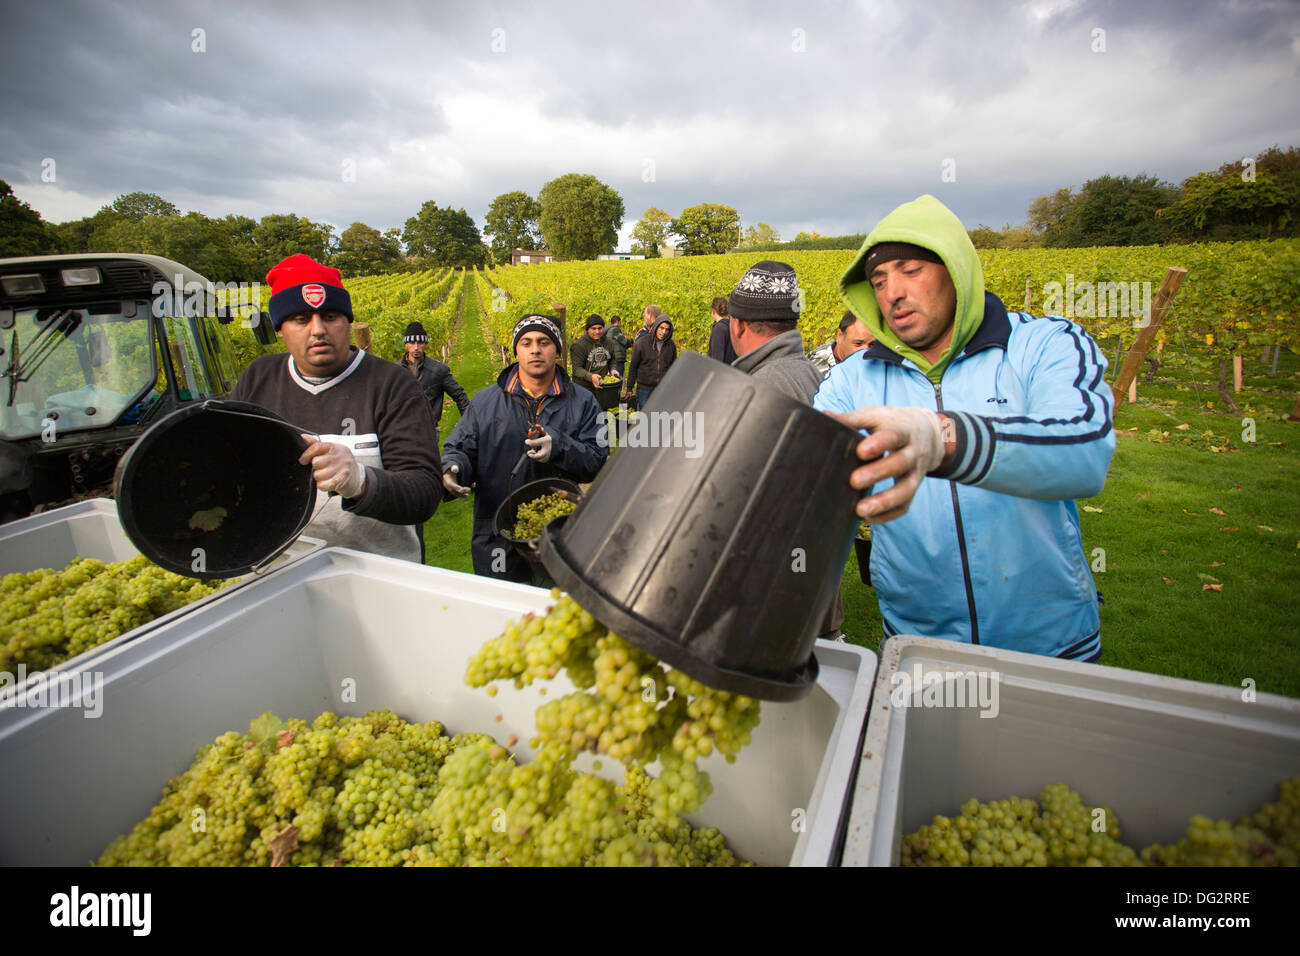 Fruit pickers in the vineyards at English winemaker Chapel Down Wines, Tenterden, Kent, England, UK Stock Photo